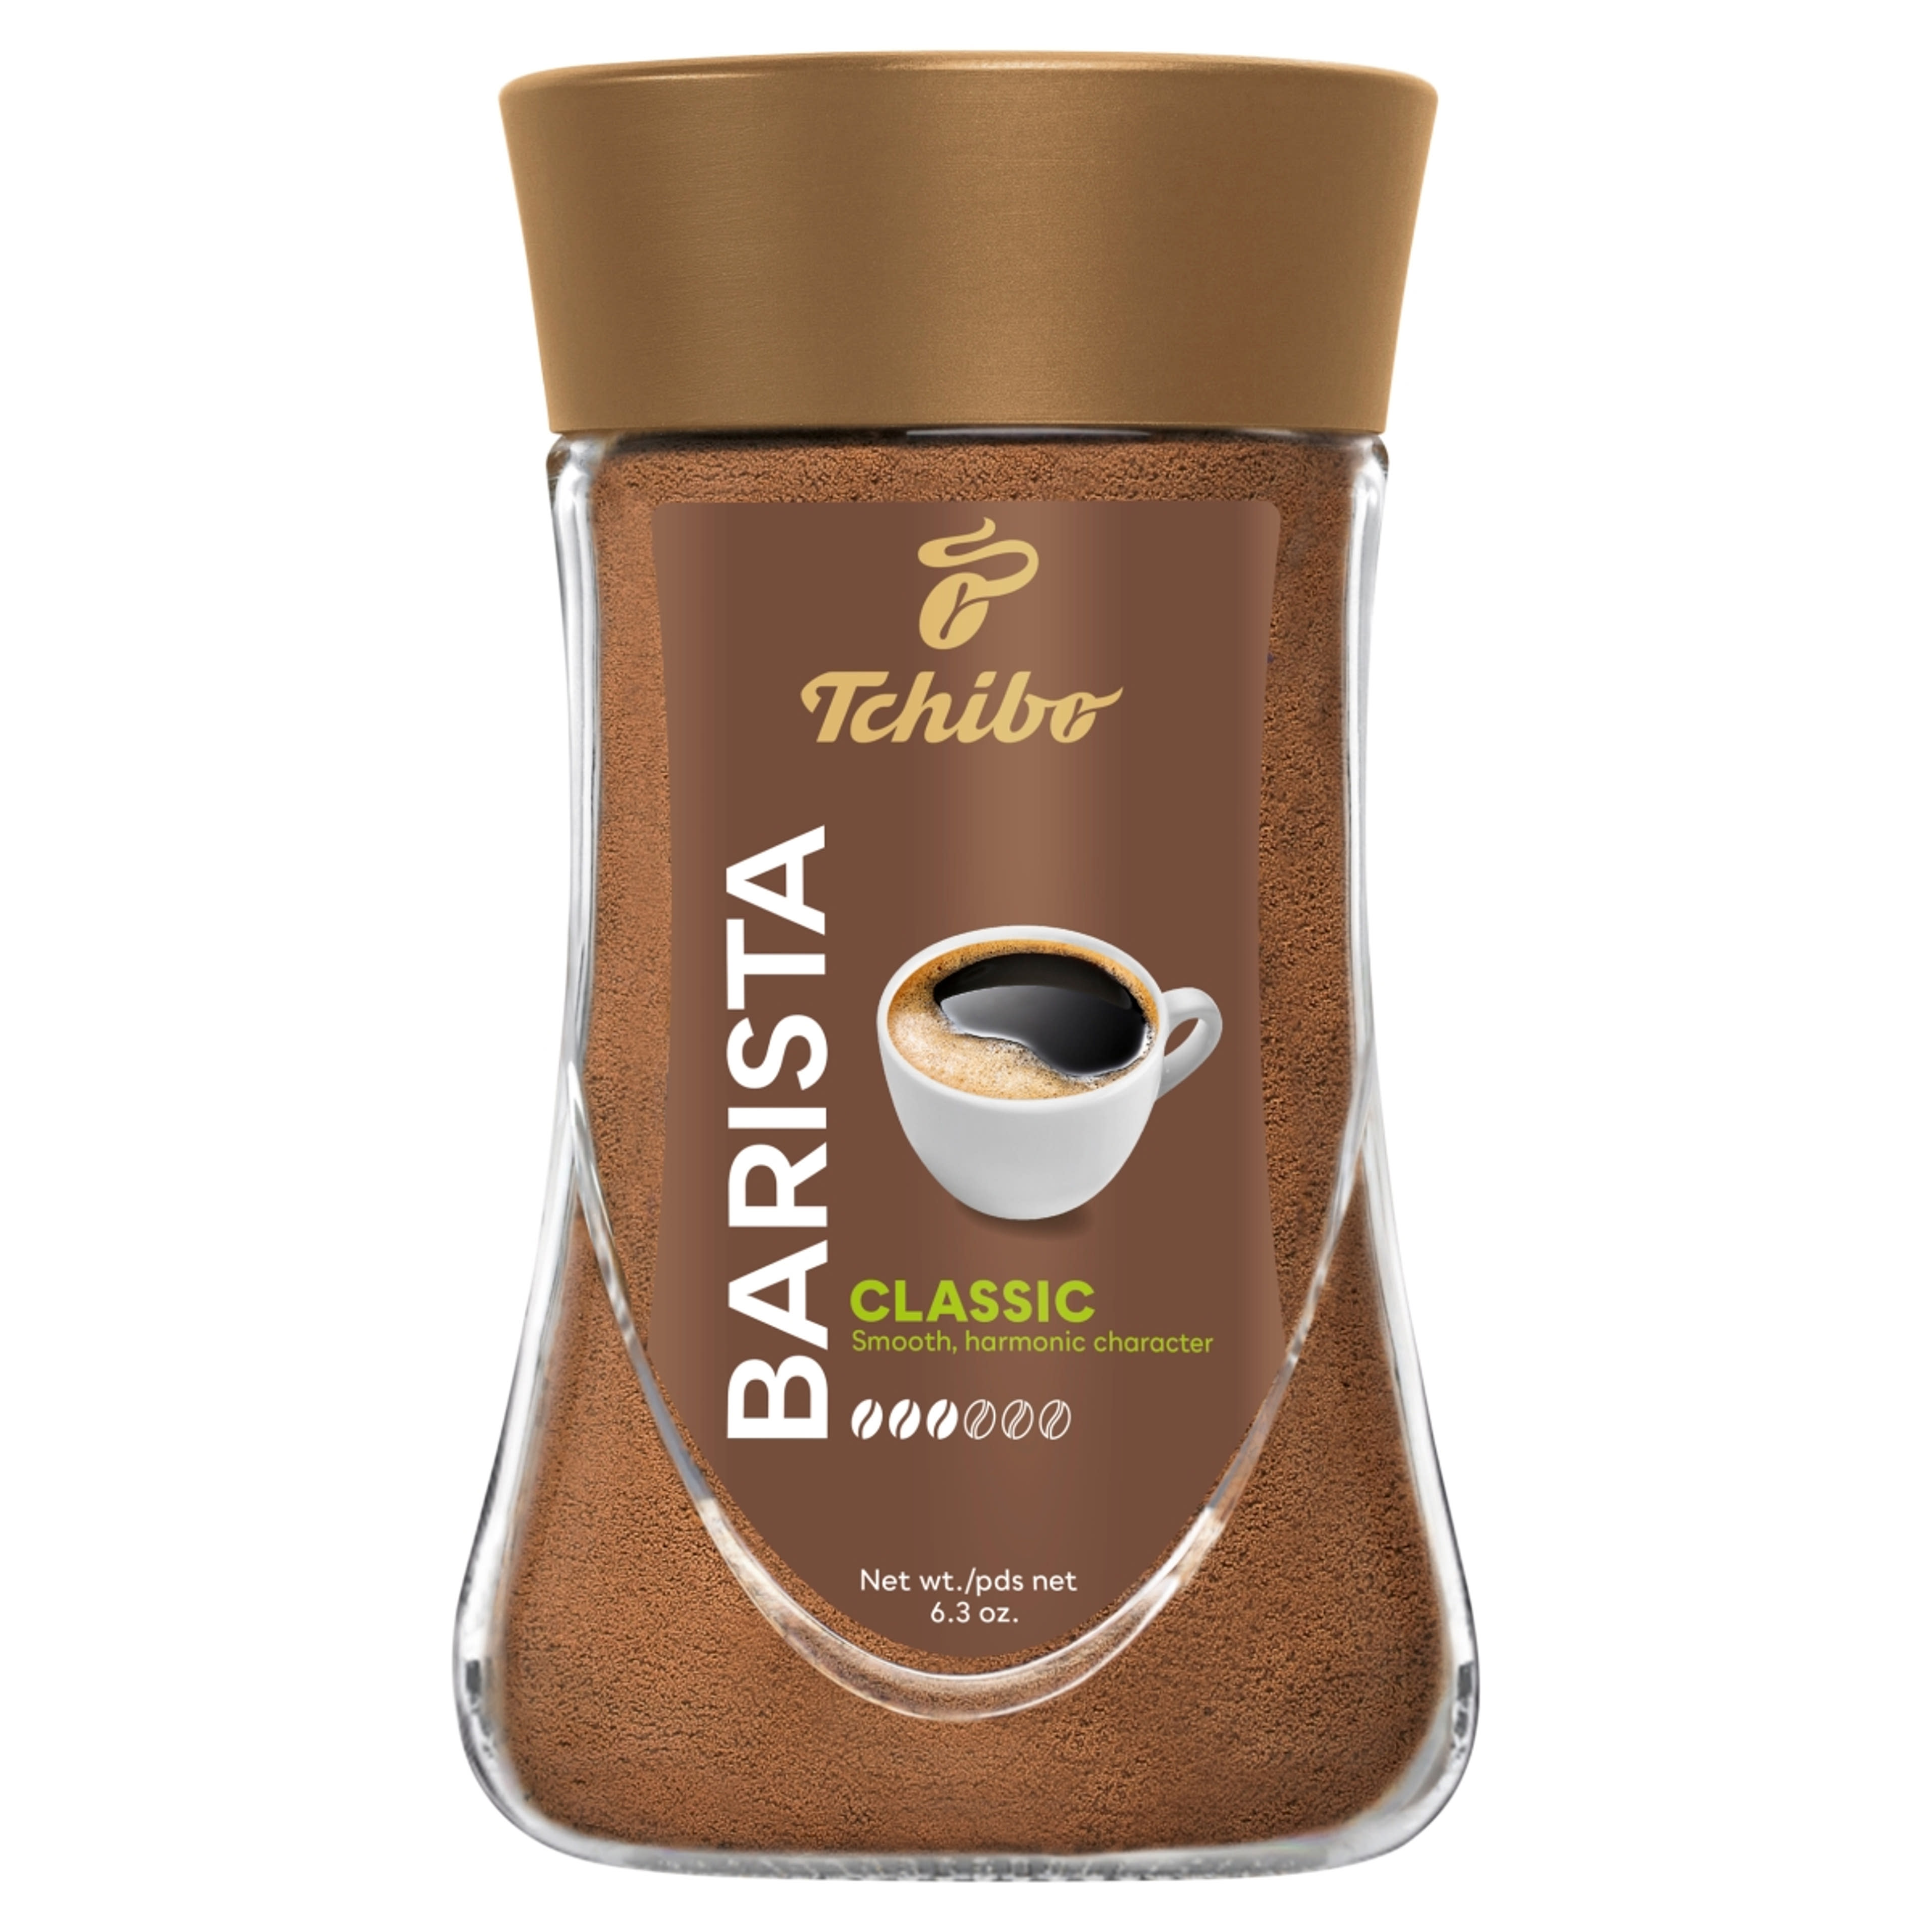 Tchibo Barista Classic instant kávé - 180 g